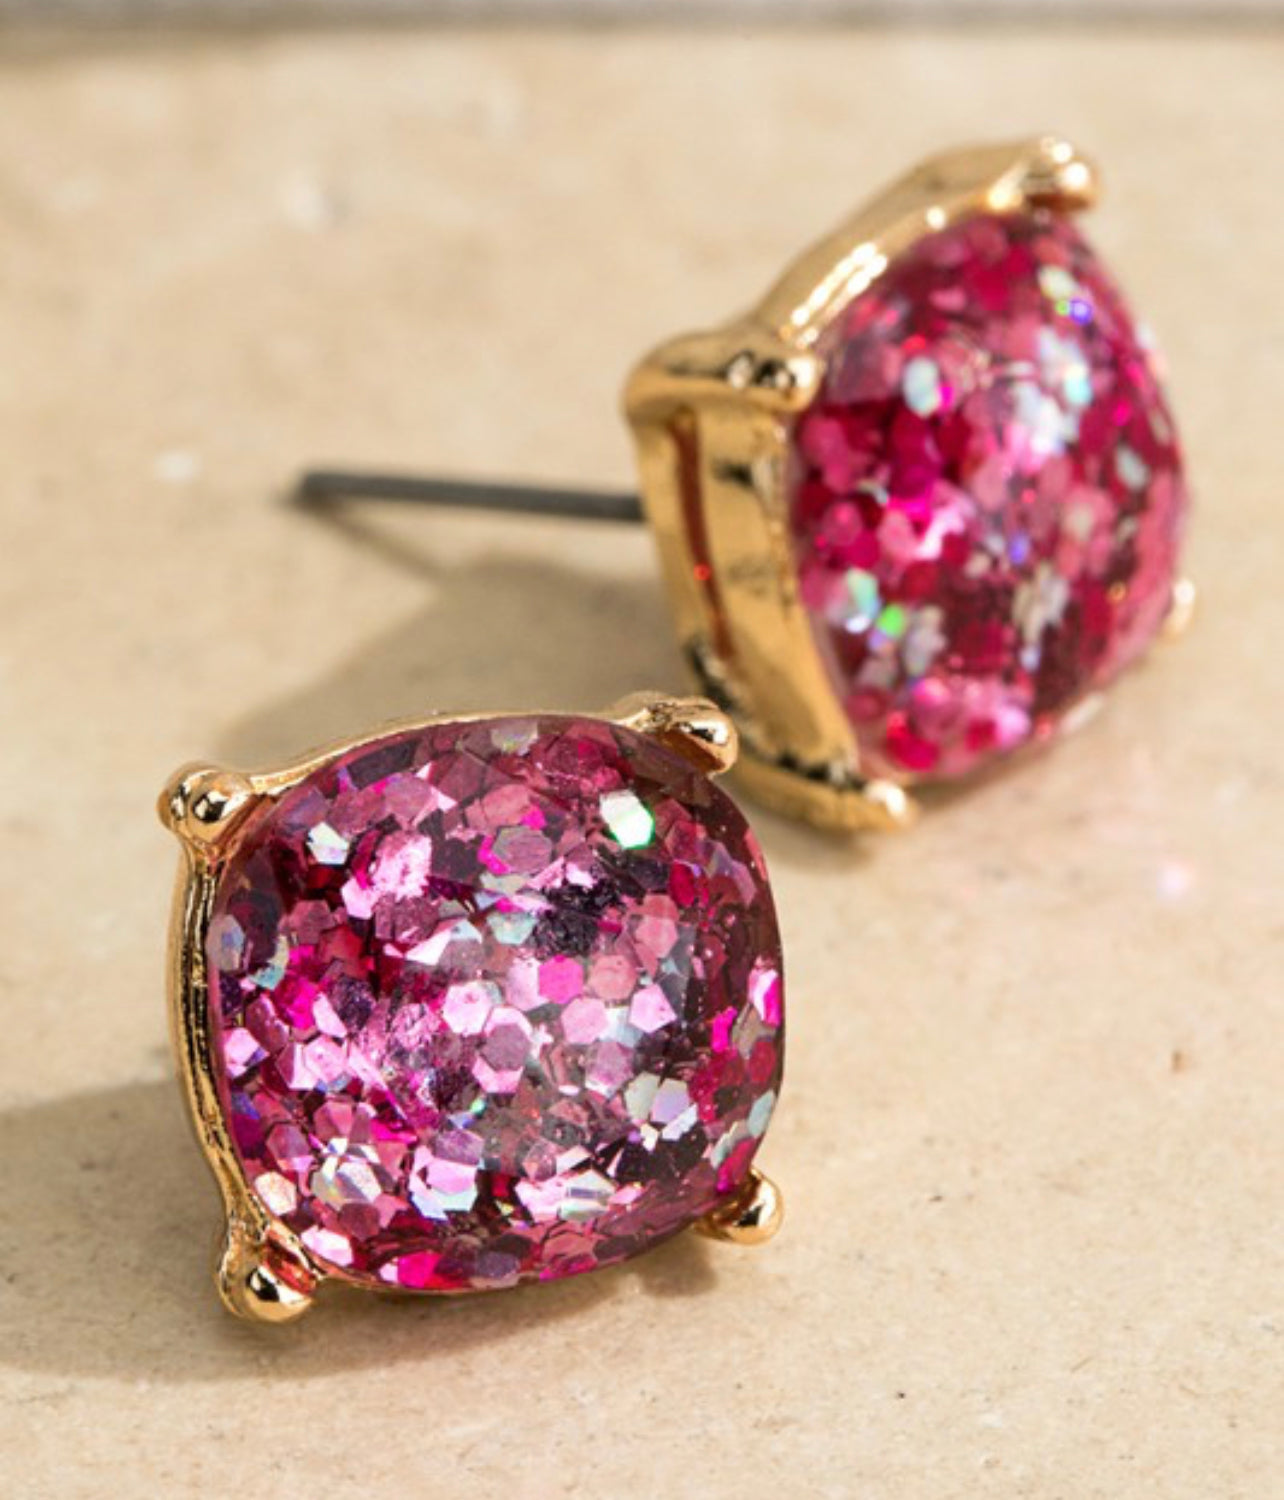 Sparkly glittery studded earrings